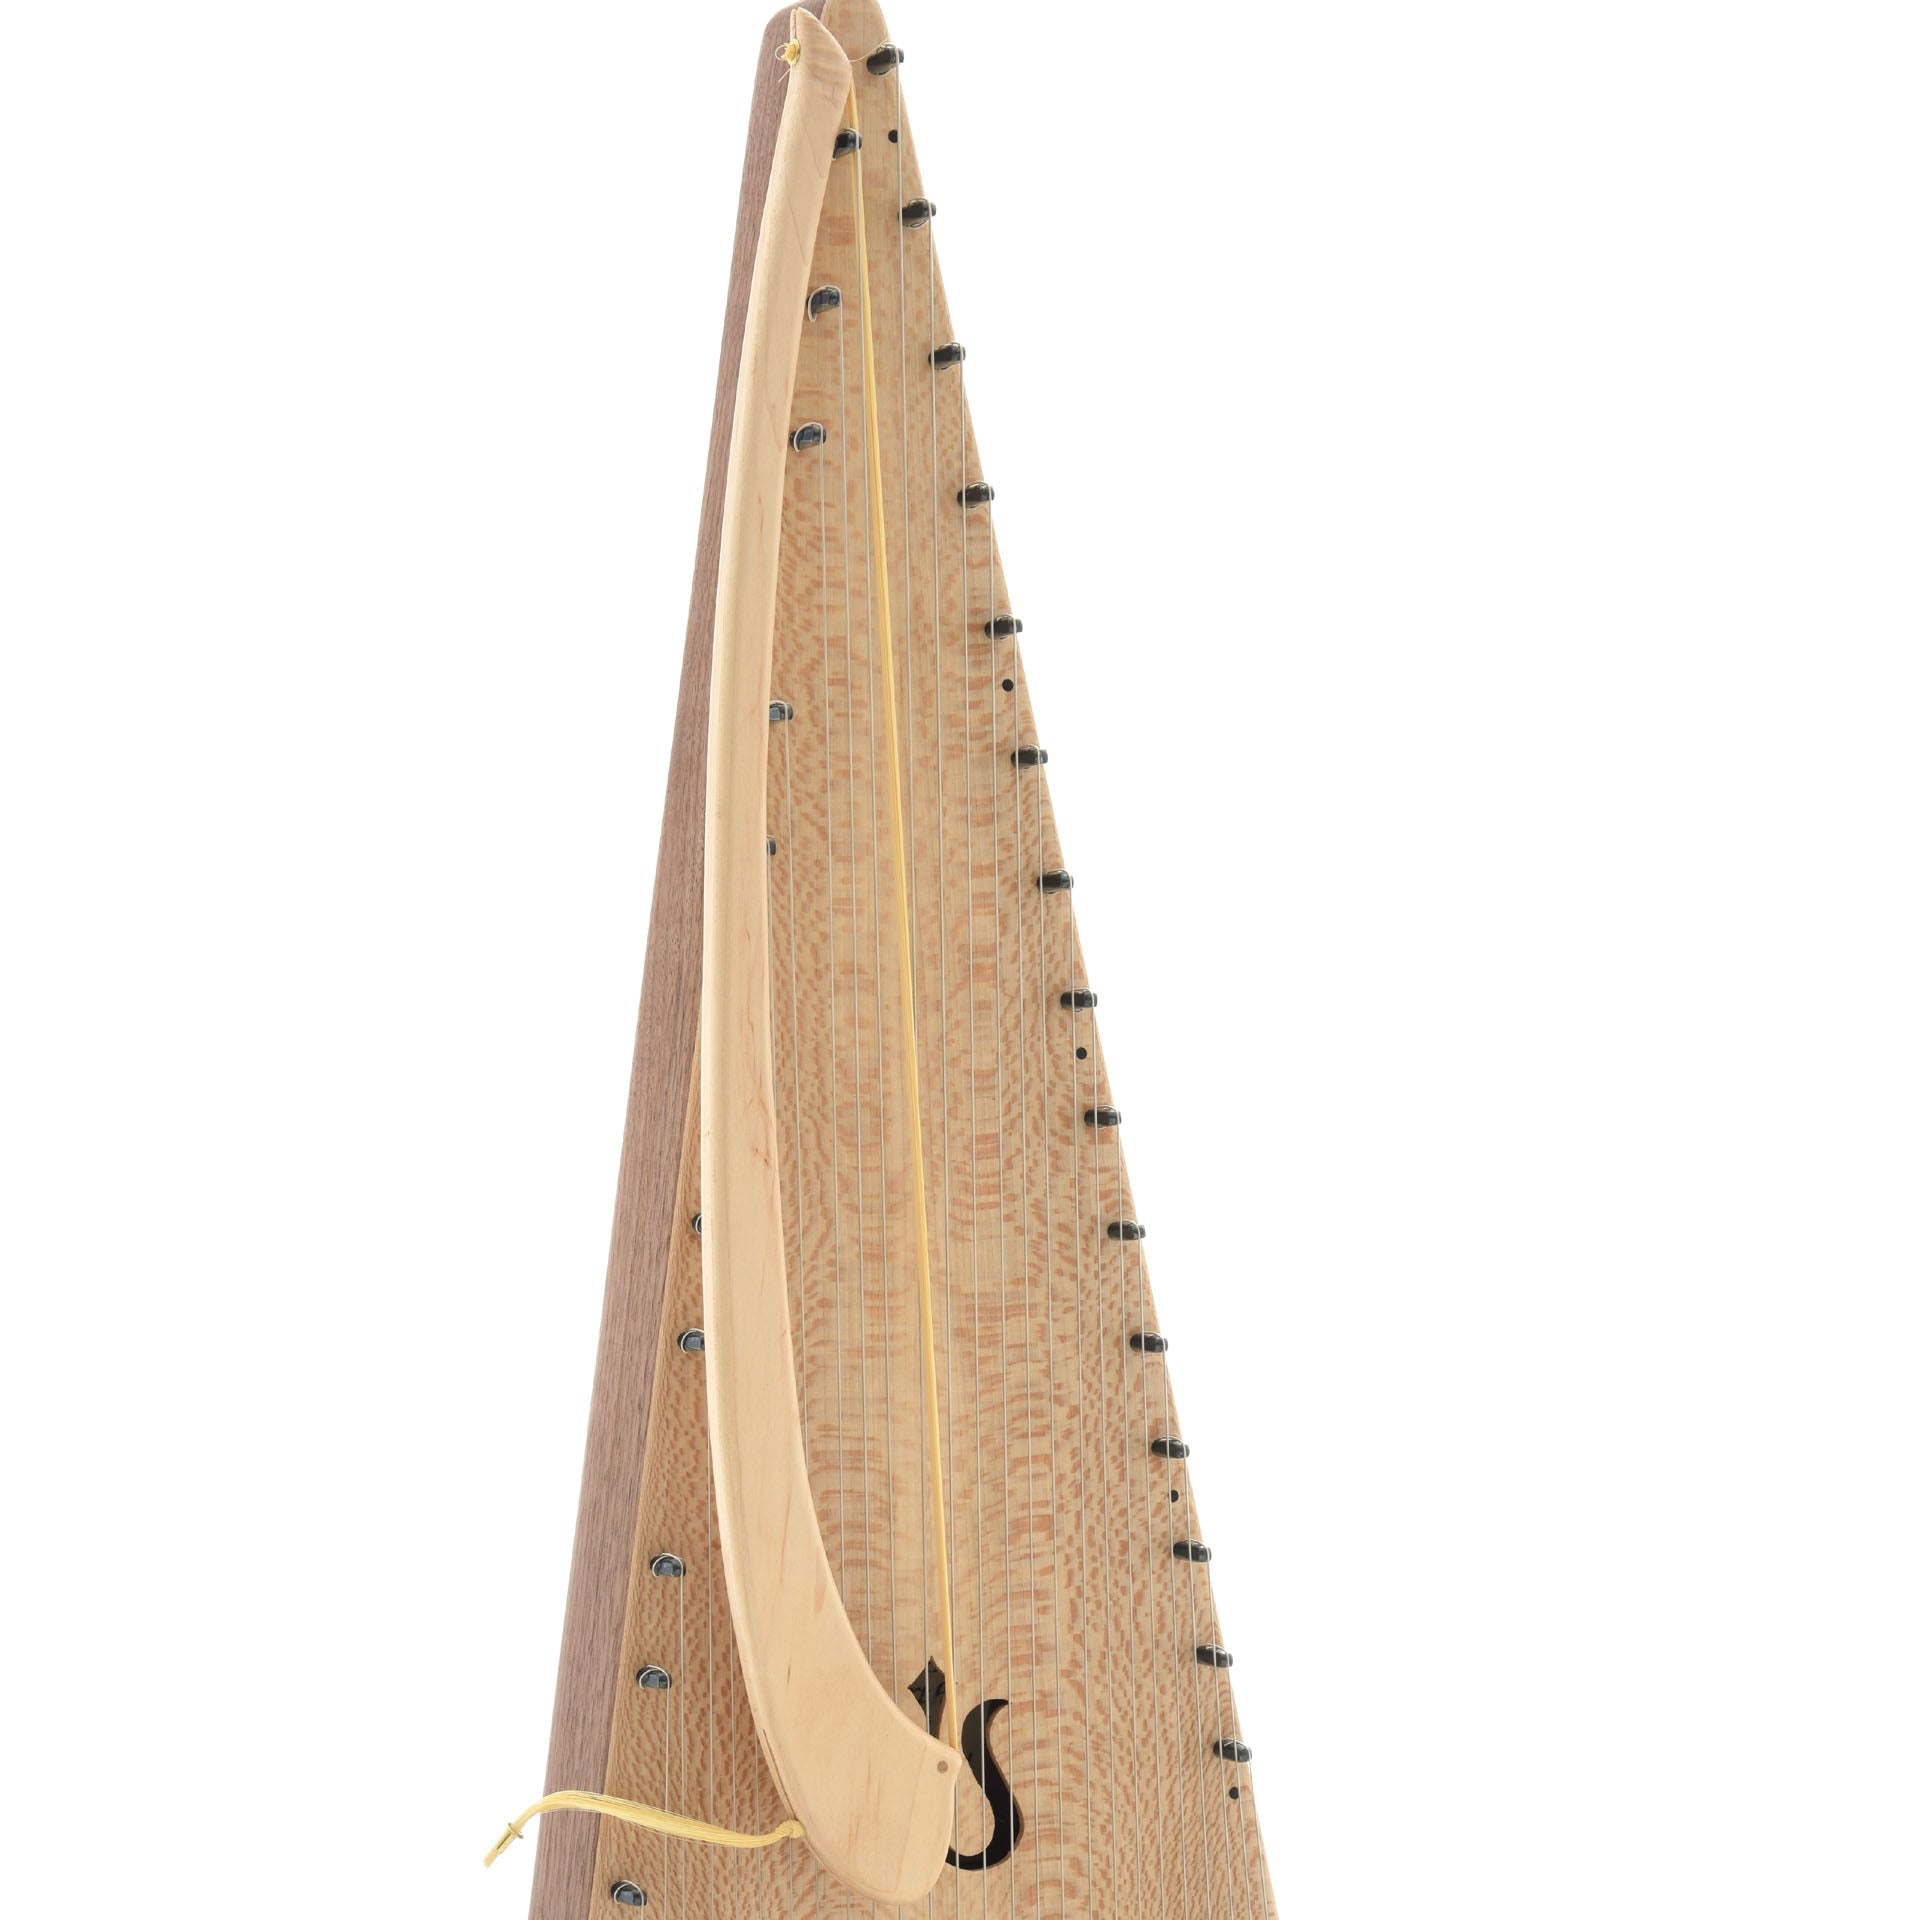 Image 6 of Noteworthy Tenor Psaltery, Bow & Bag - SKU# GP150 : Product Type Harps & Psalteries : Elderly Instruments